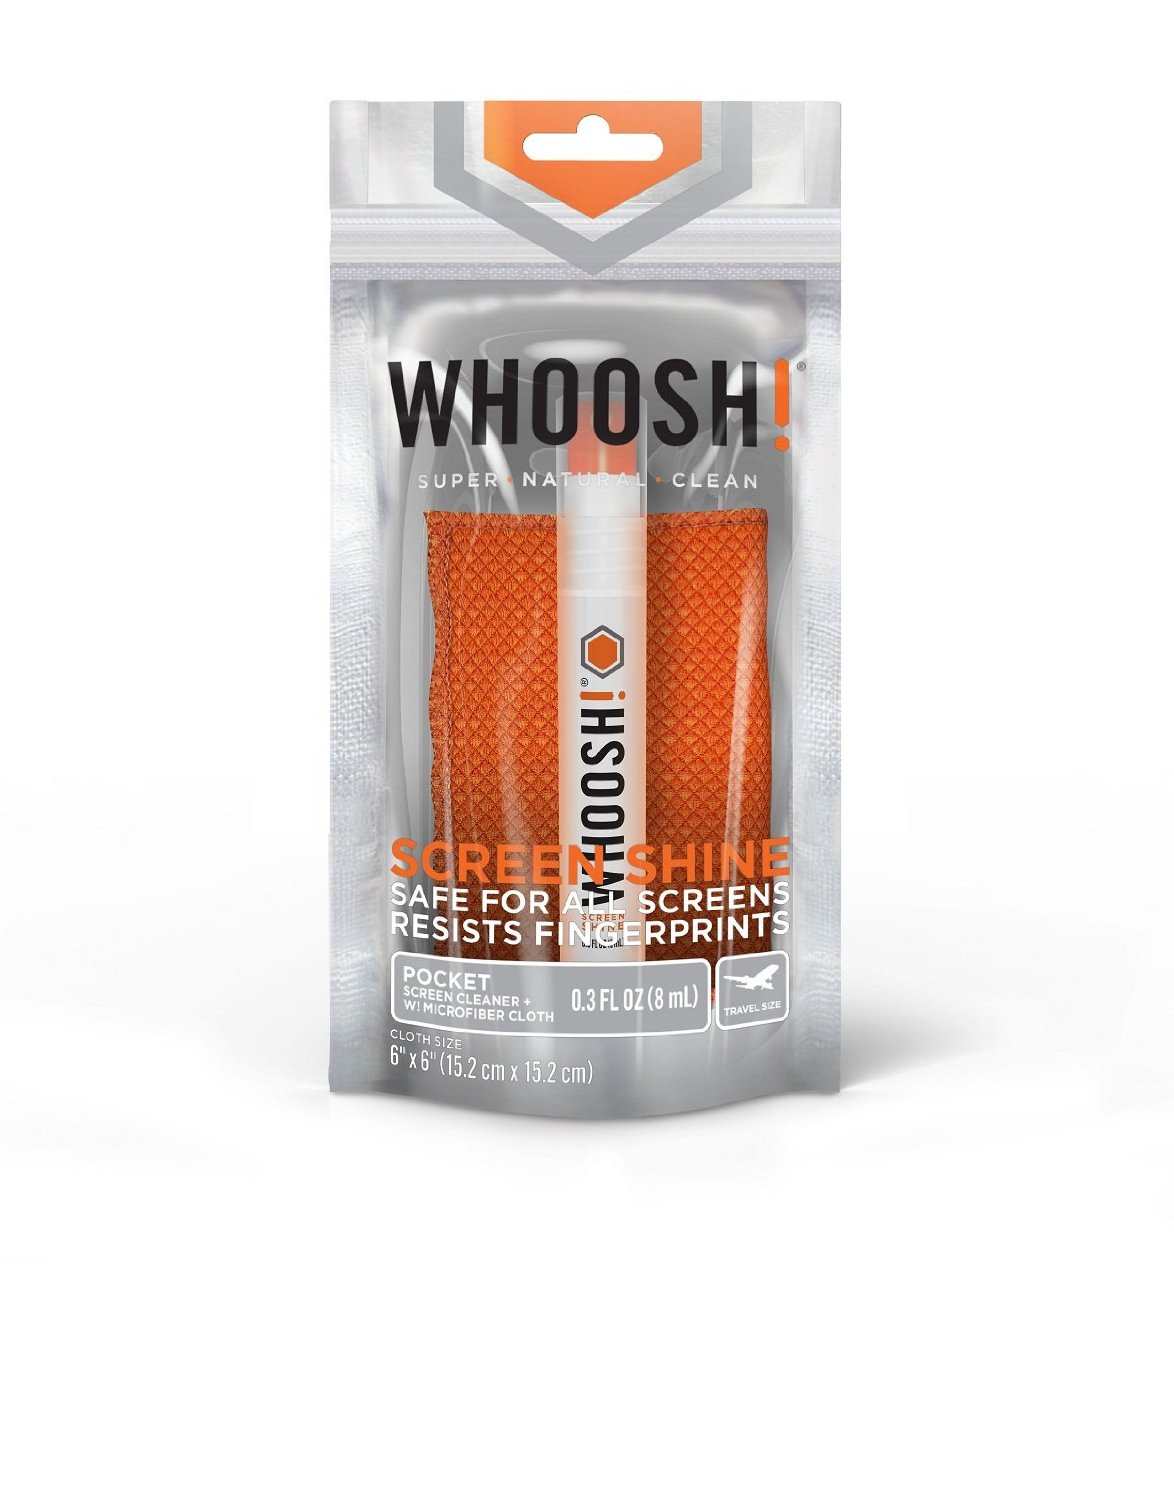 Whoosh Screen Shine Pocket Cleaning Kit